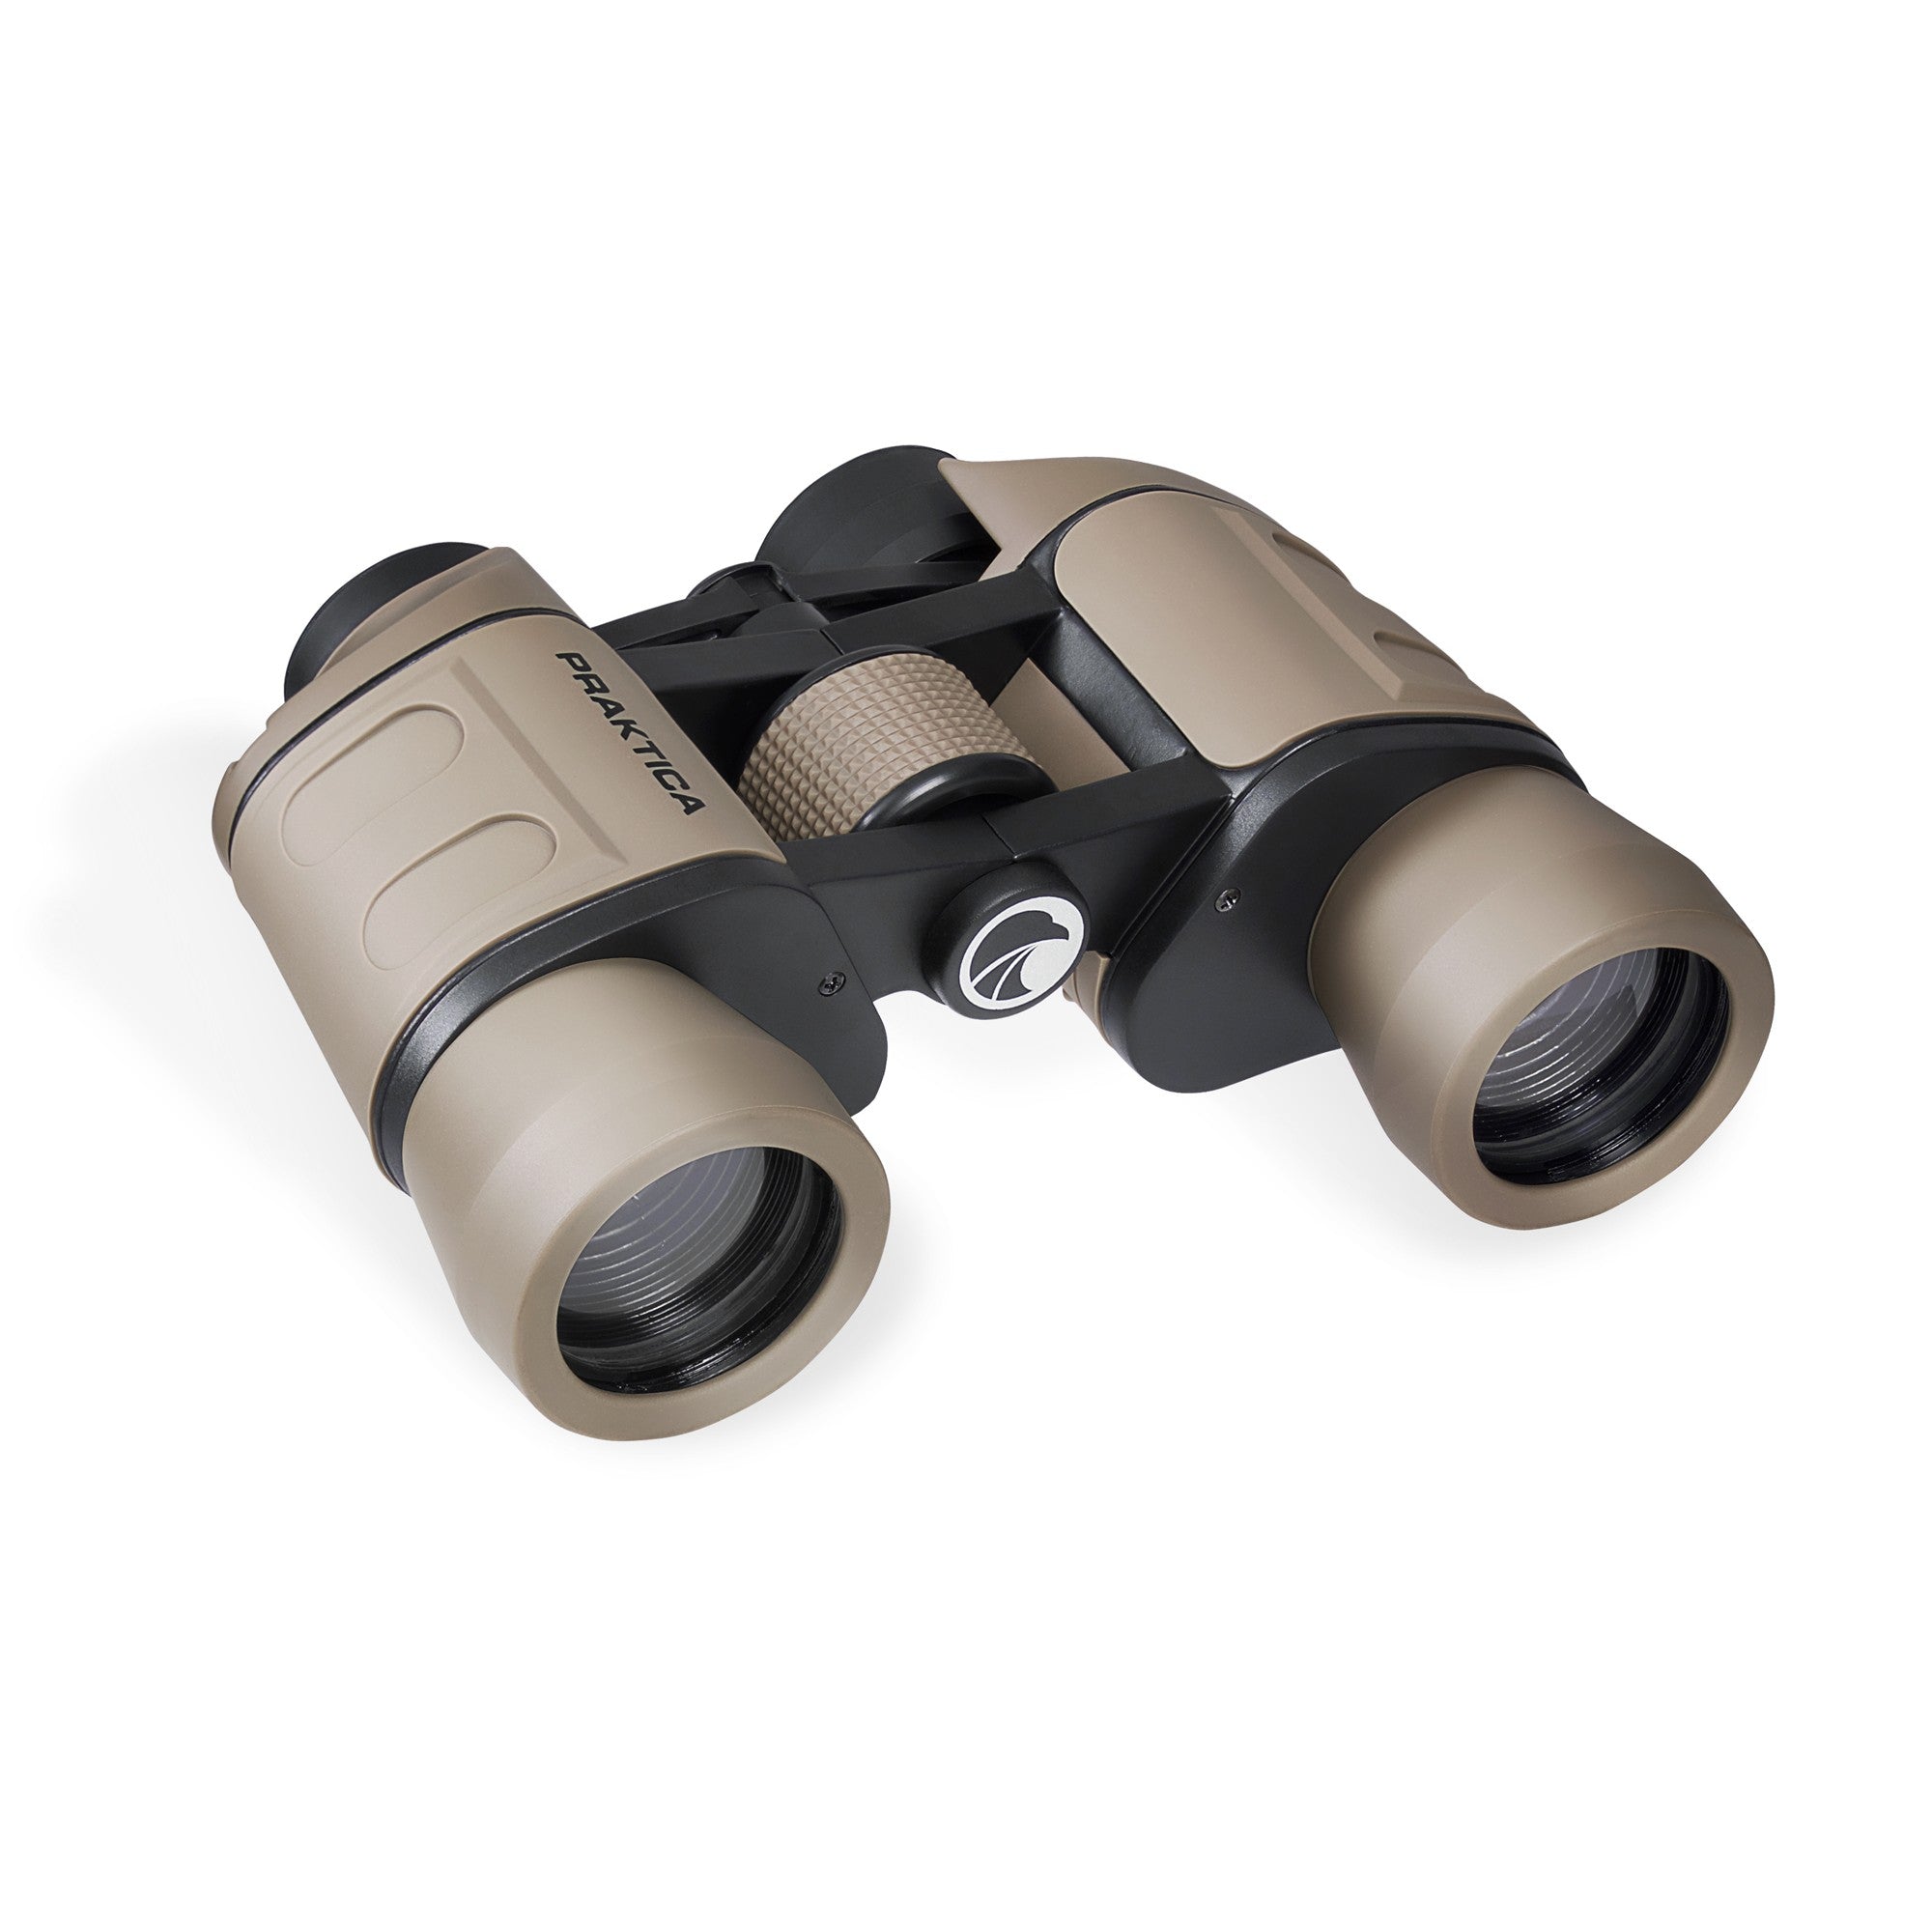 PRAKTICA Falcon 8x40mm Wide Angle Porro Prism Field Binoculars - Sand (Binoculars Only)